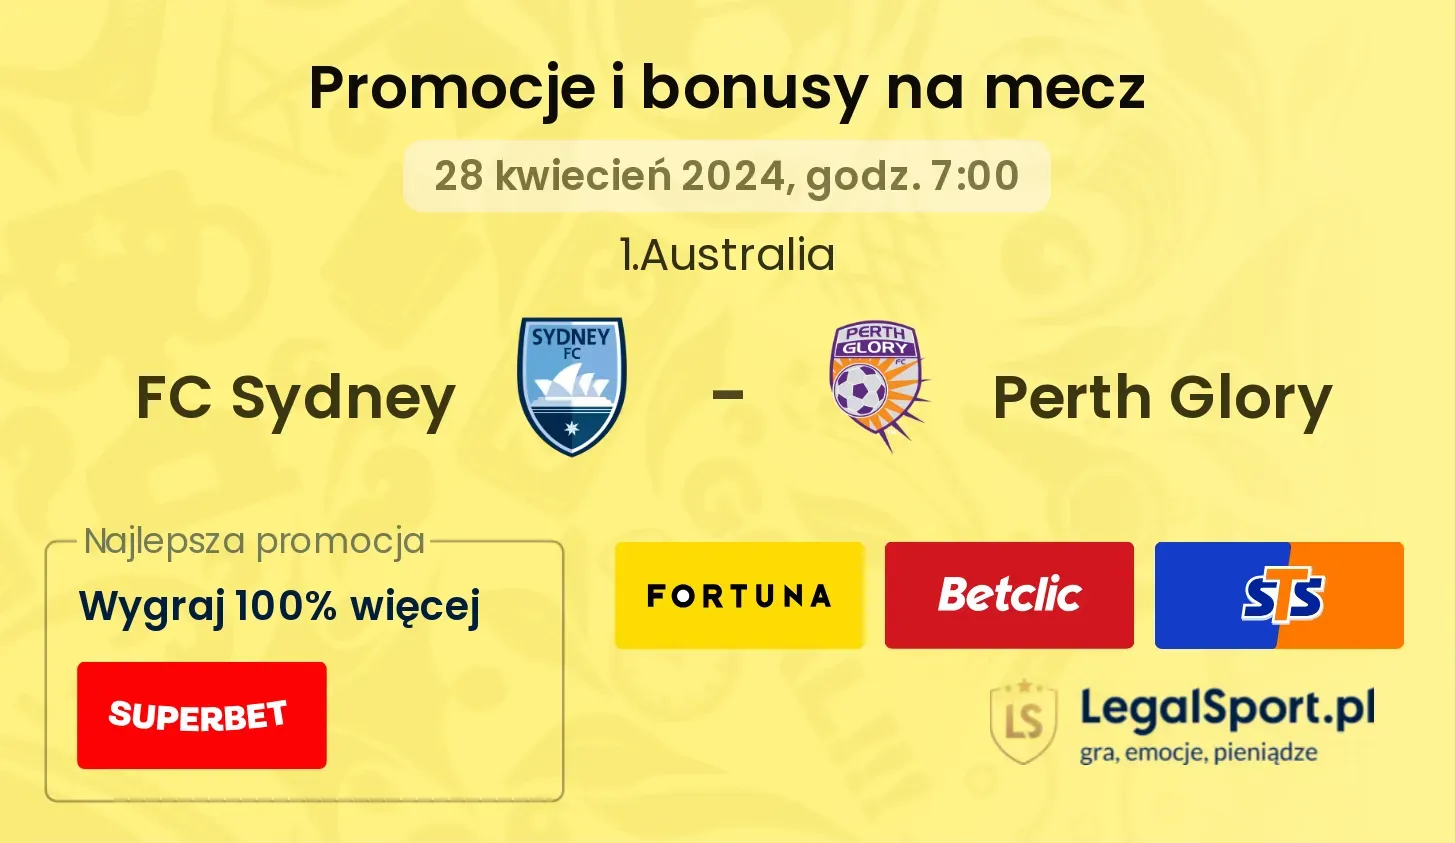 FC Sydney - Perth Glory promocje bonusy na mecz